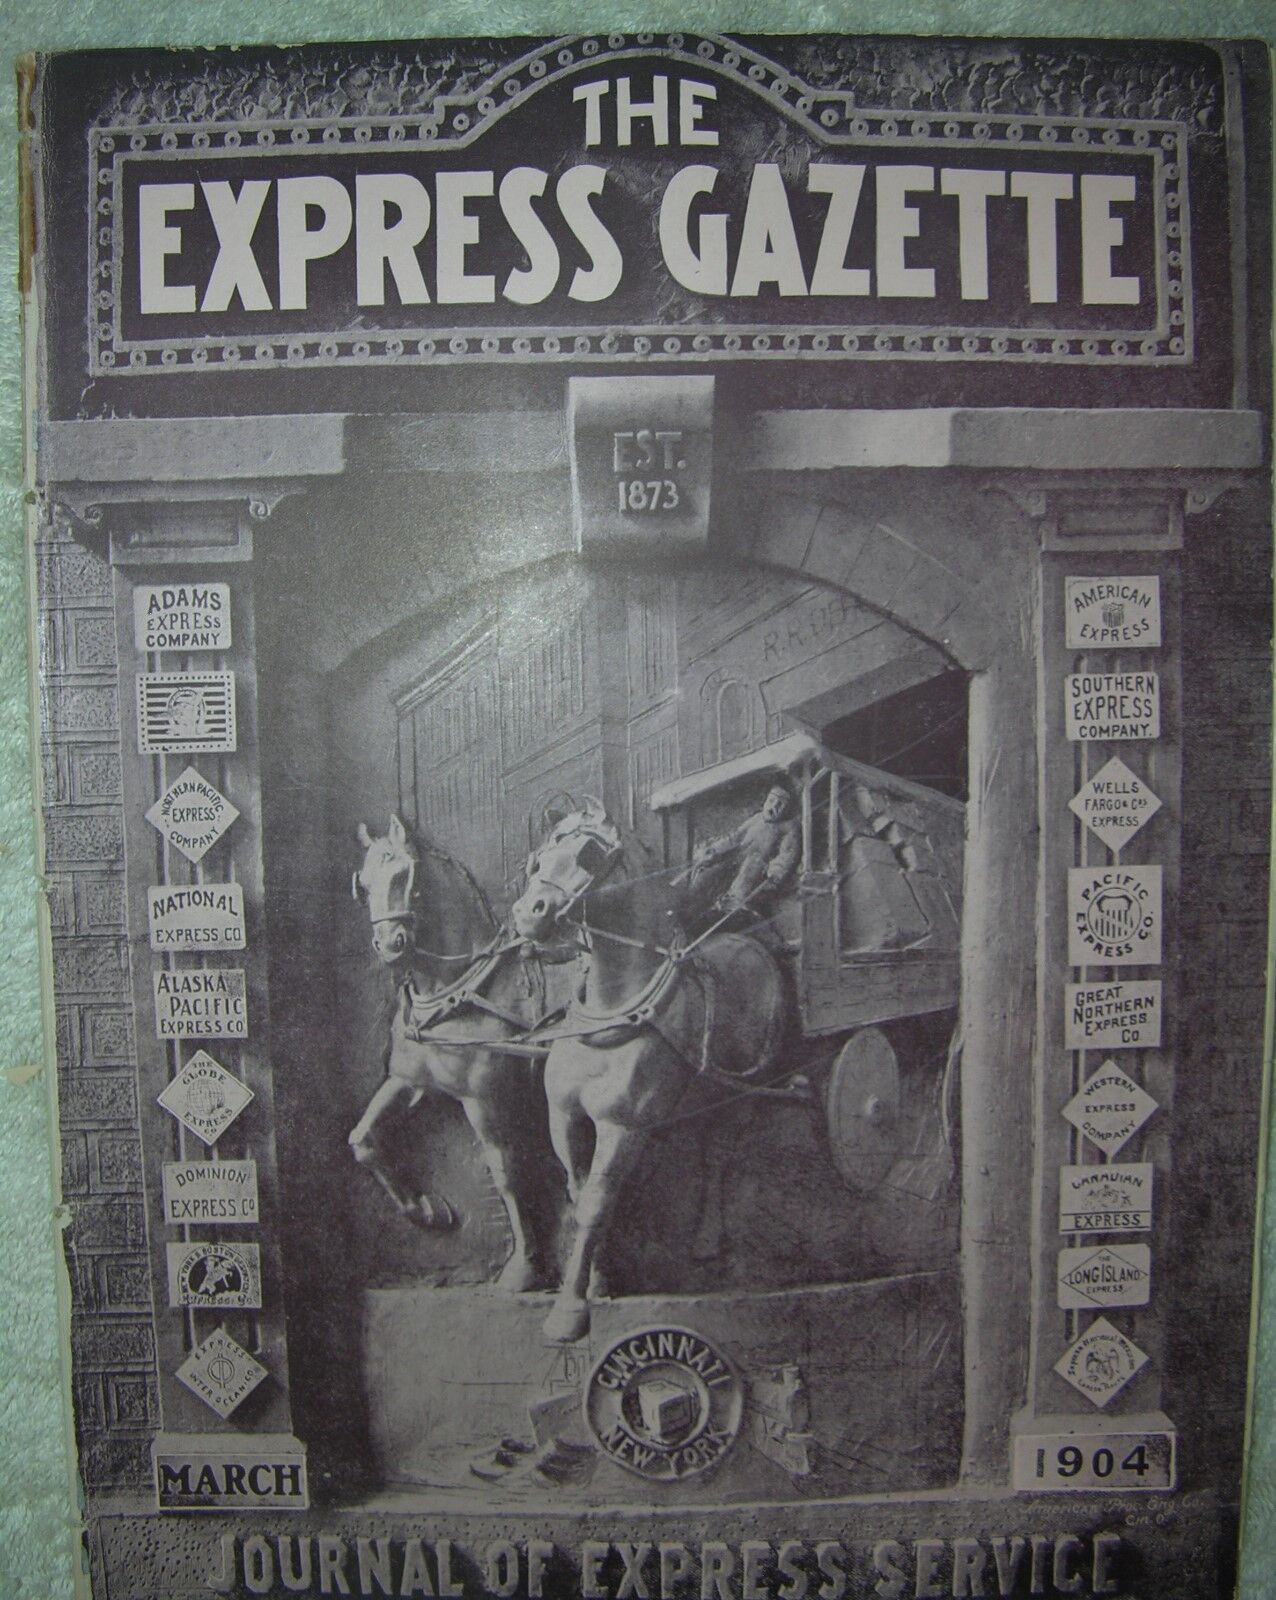 RAILWAY EXPRESS GAZETTE MAGAZINE MARCH, 1904 (JOURNAL OF EXPRESS SERVICE)